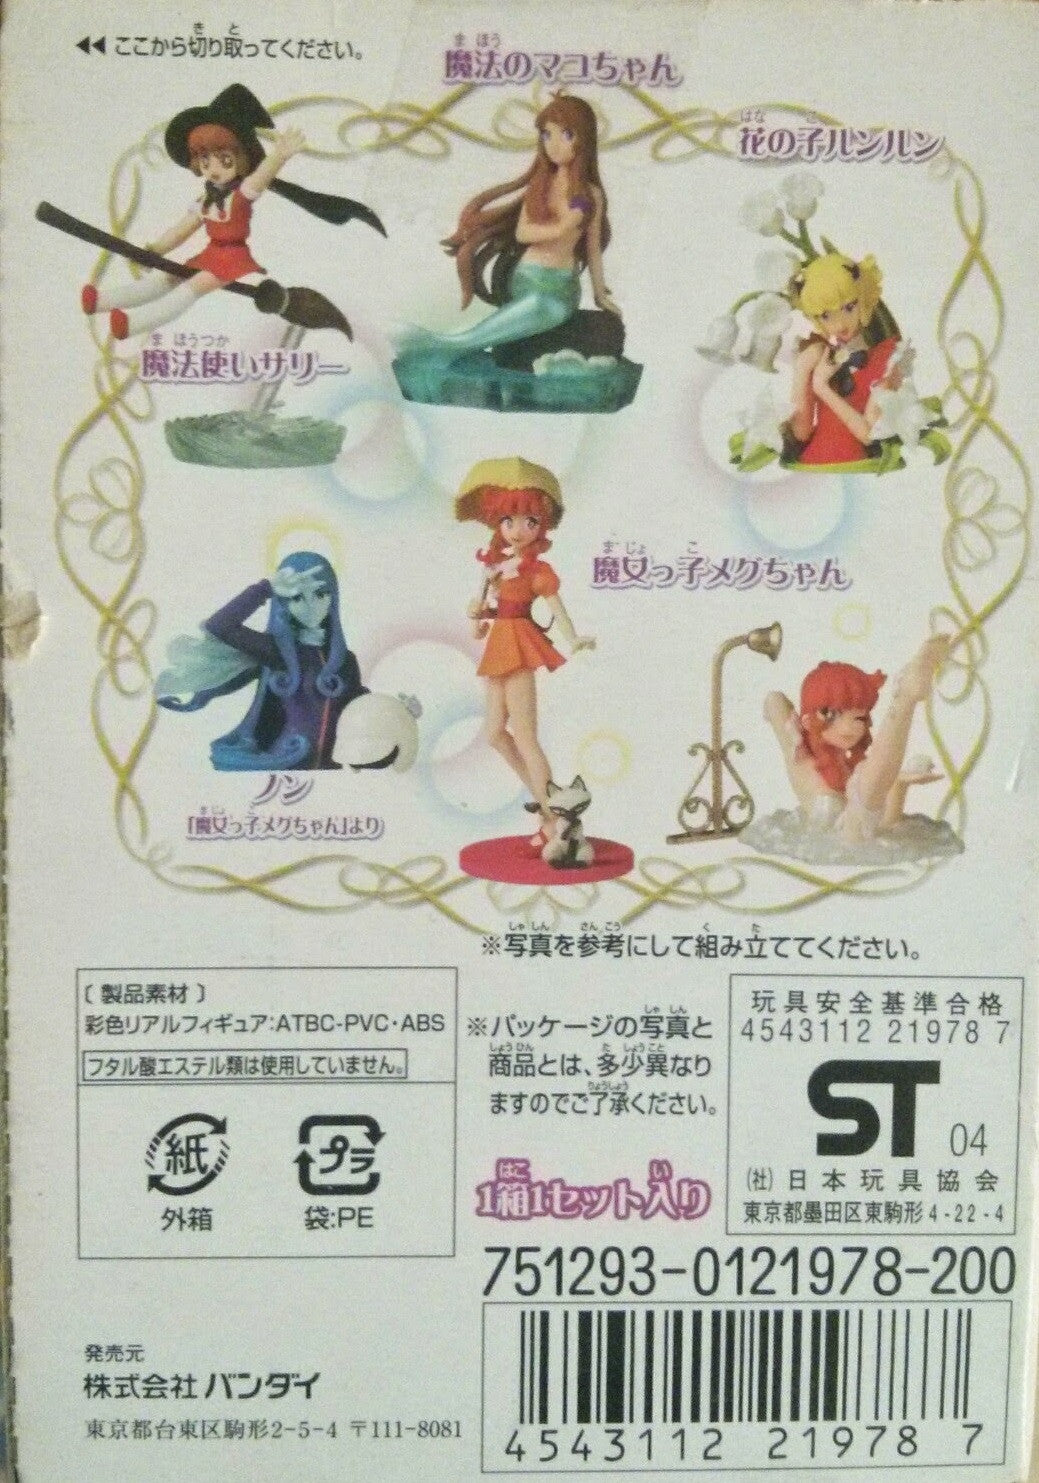 Bandai 2004 Toei Anime Heroine Collection 6 Trading Figure Set - Lavits Figure
 - 2